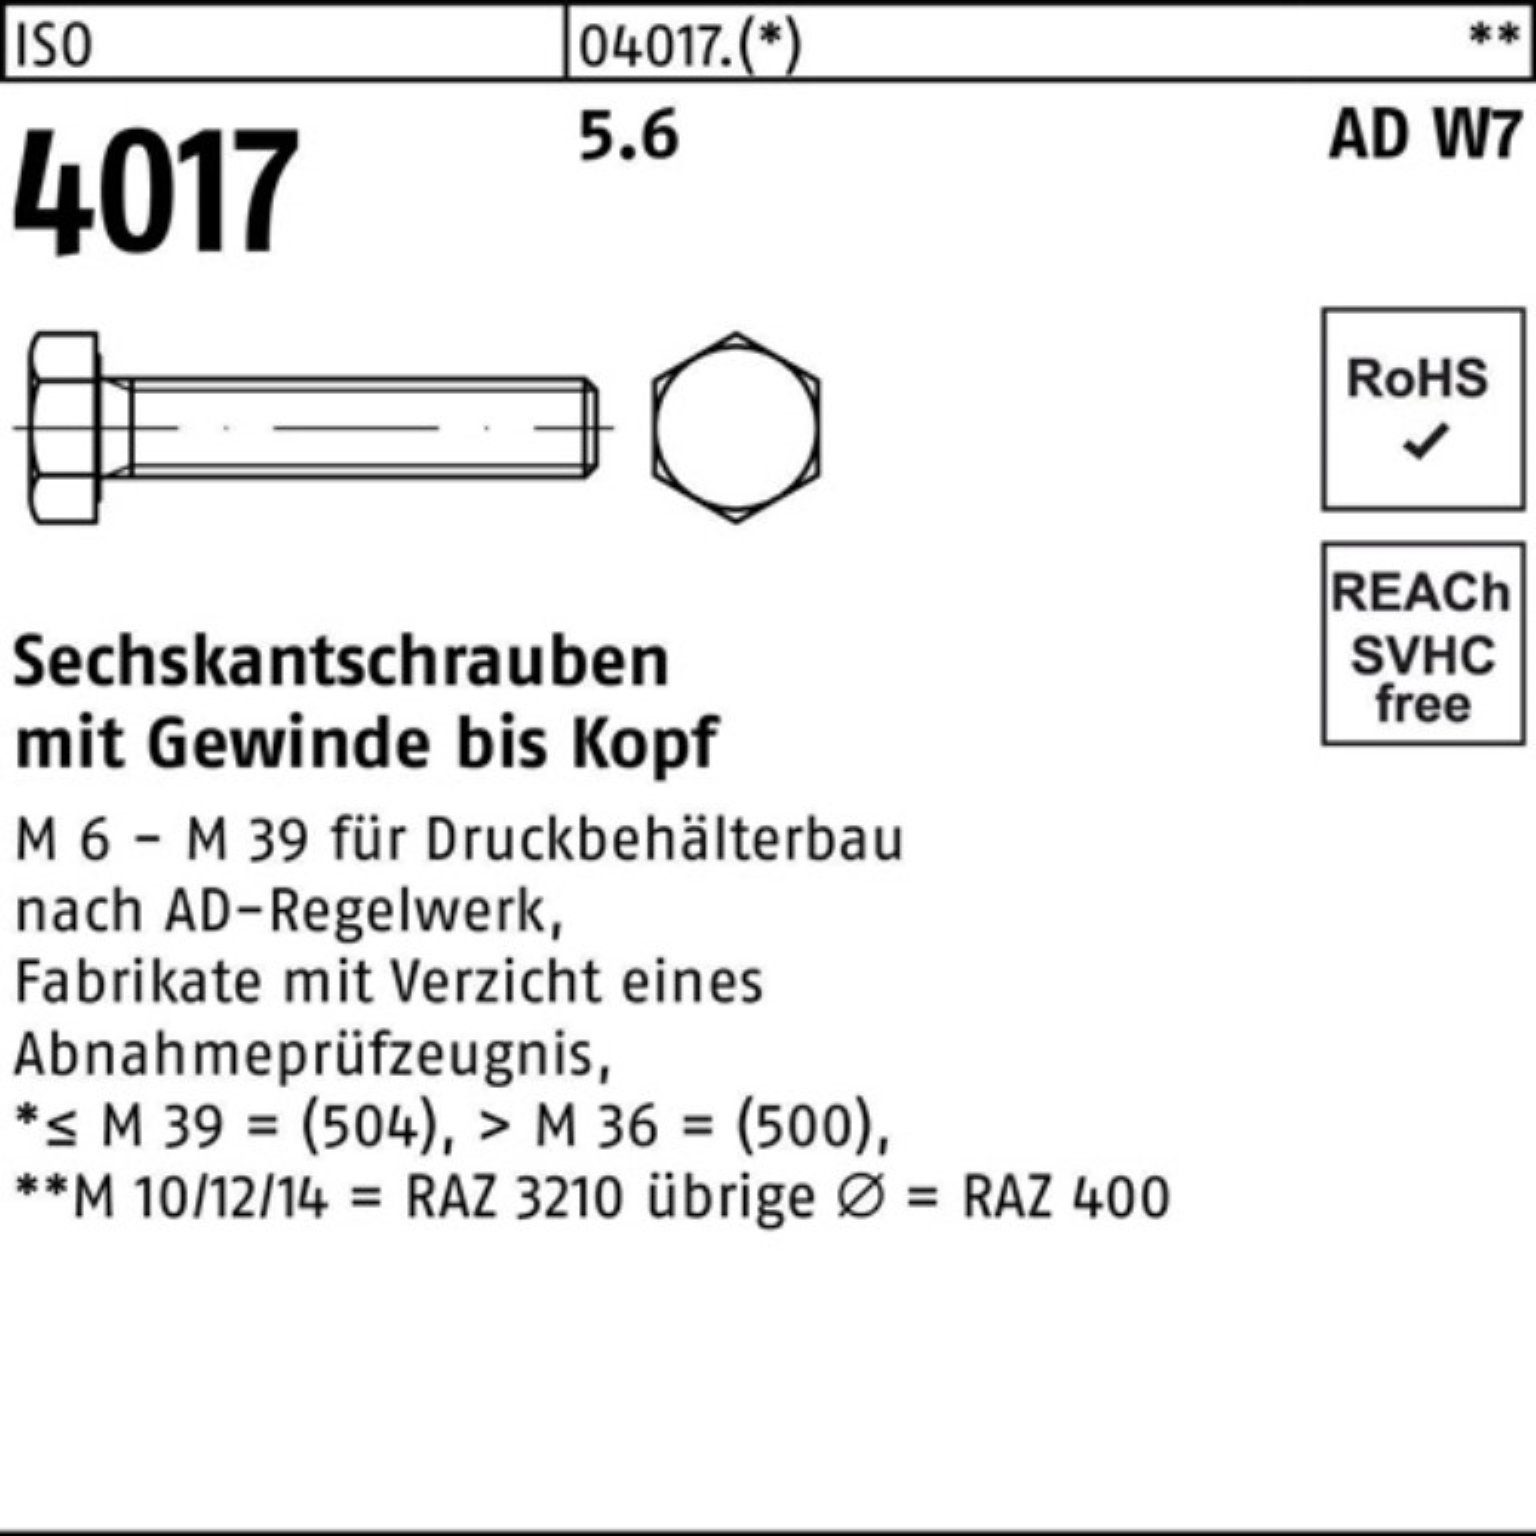 VG Sechskantschraube Pack 4017 100er 25 Stück AD 5.6 I Bufab ISO M16x Sechskantschraube 90 W7